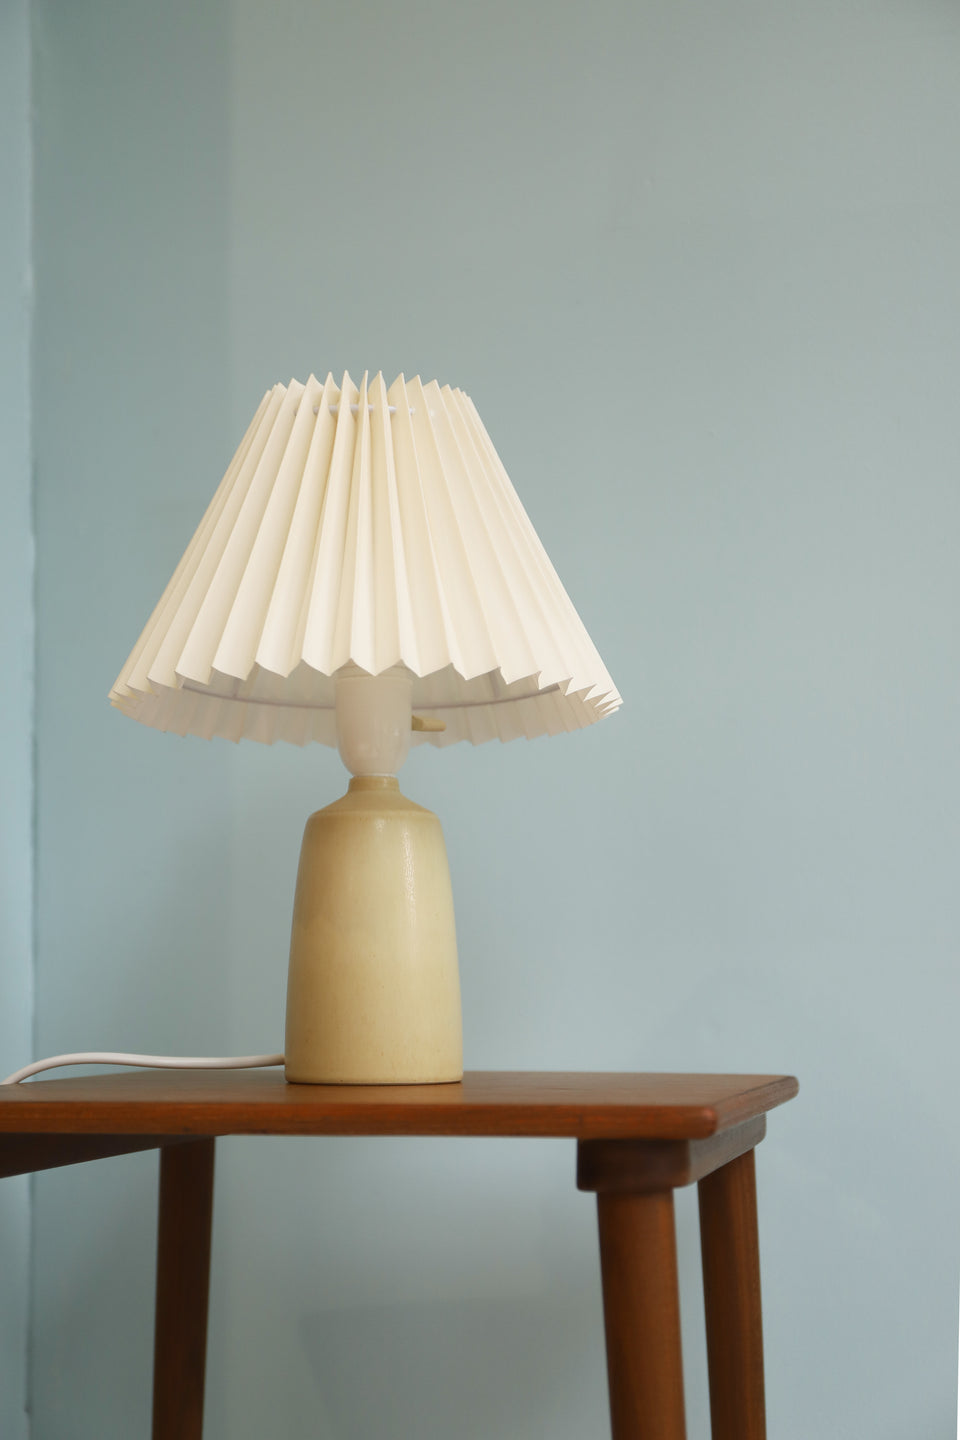 Danish Vintage Palshus Table Lamp/パルシュス テーブルランプ デンマークヴィンテージ 間接照明 北欧インテリア